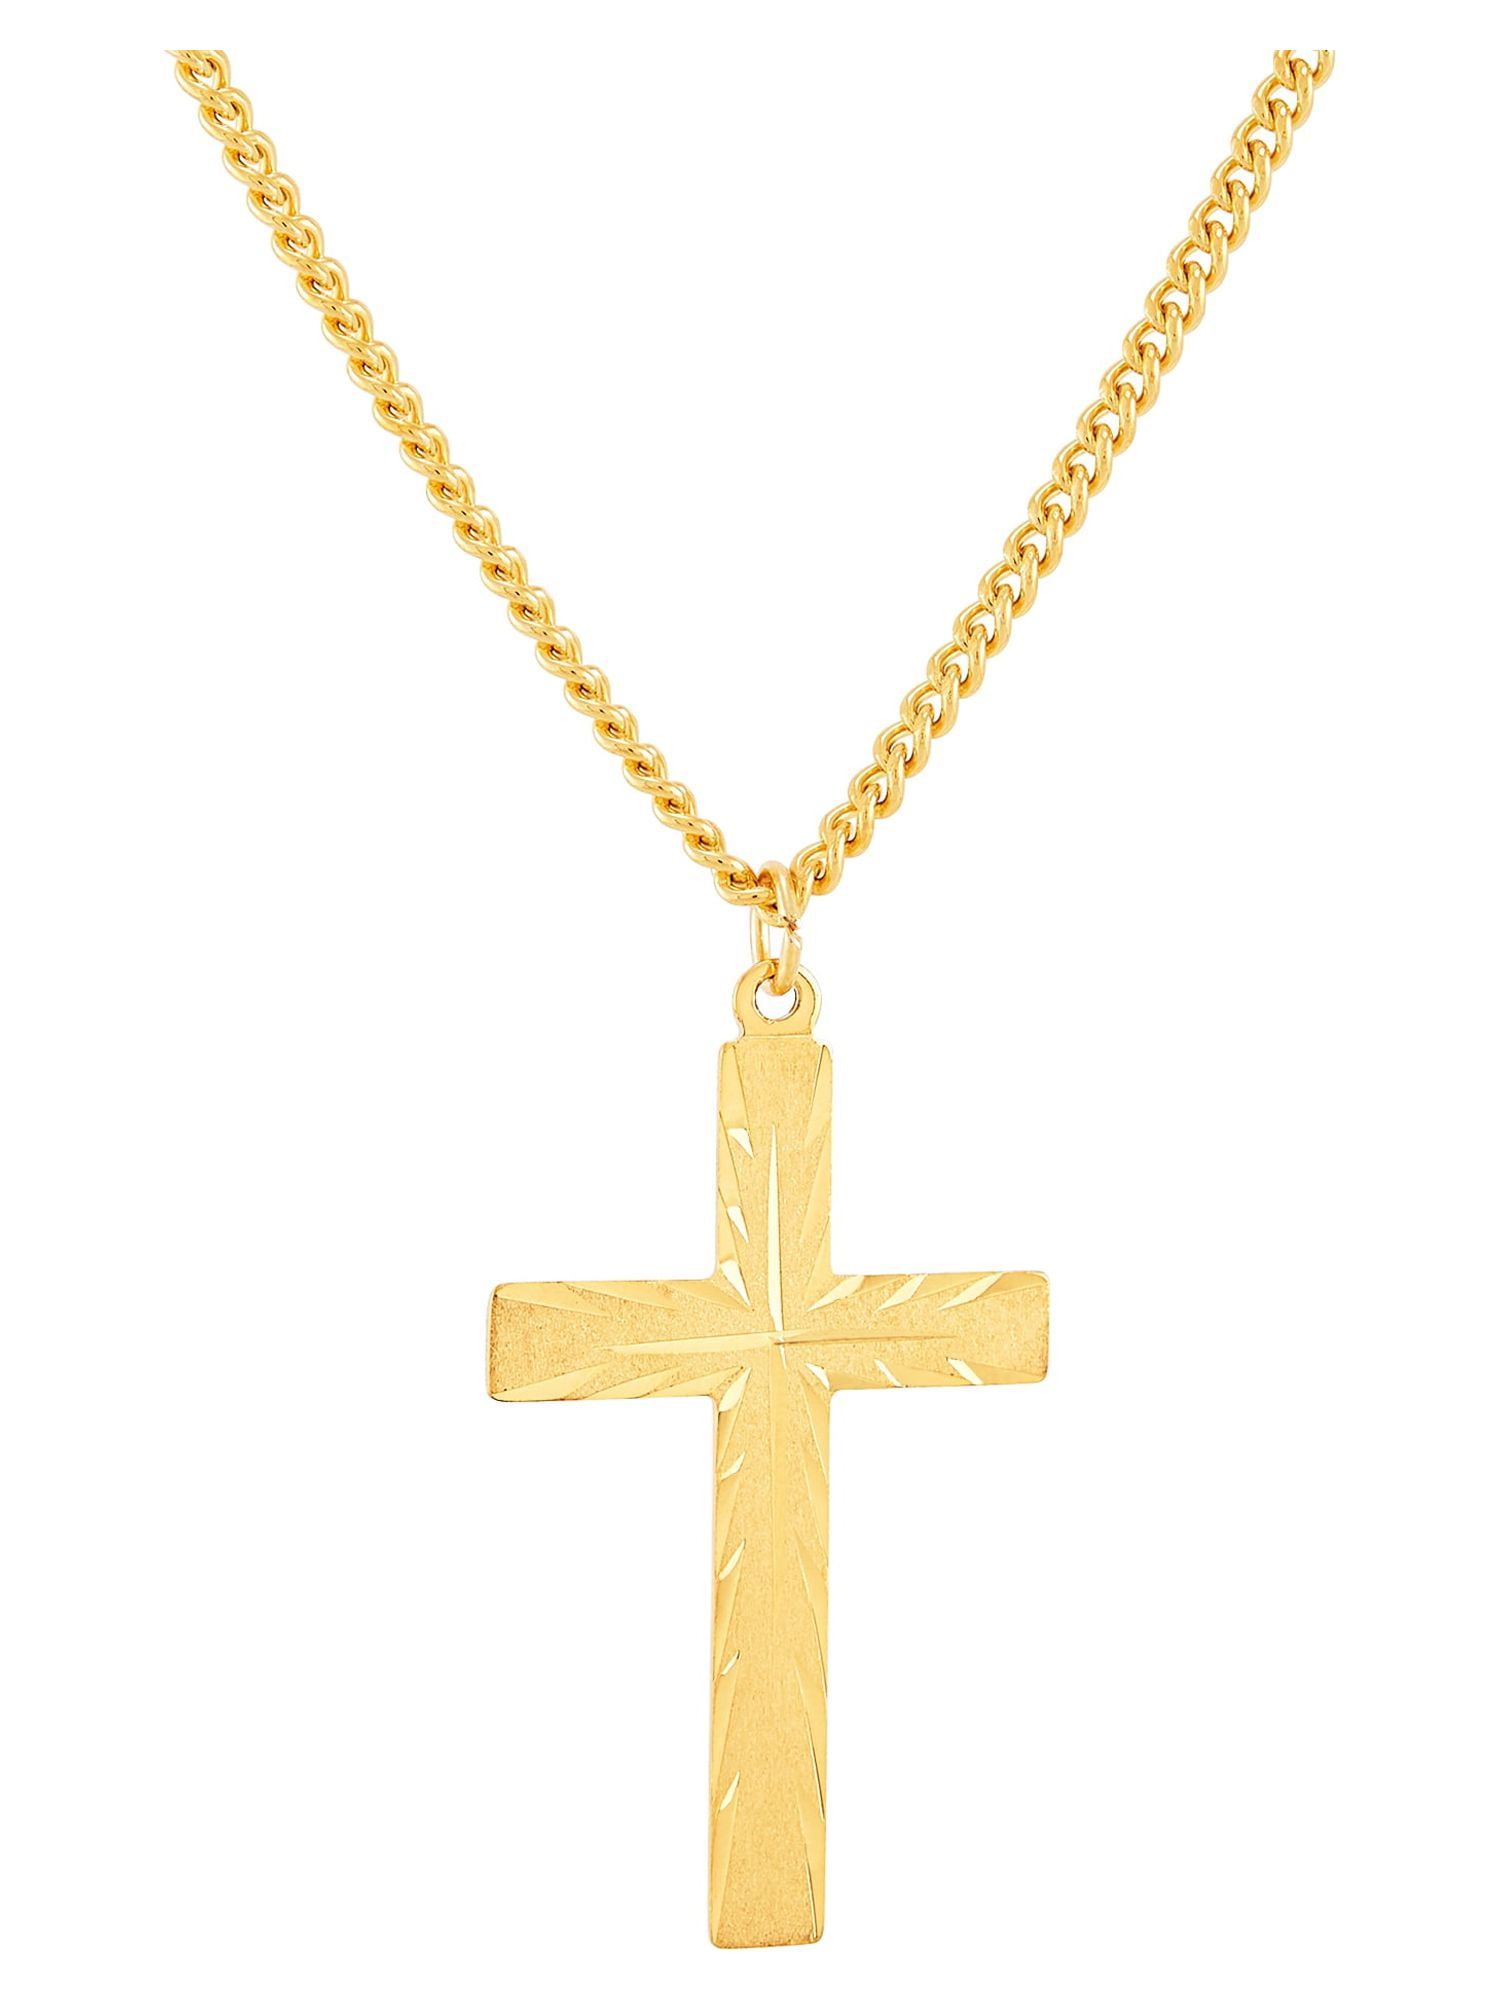 Brilliance Fine Jewelry Gold-Filled Cross Pendant, 24